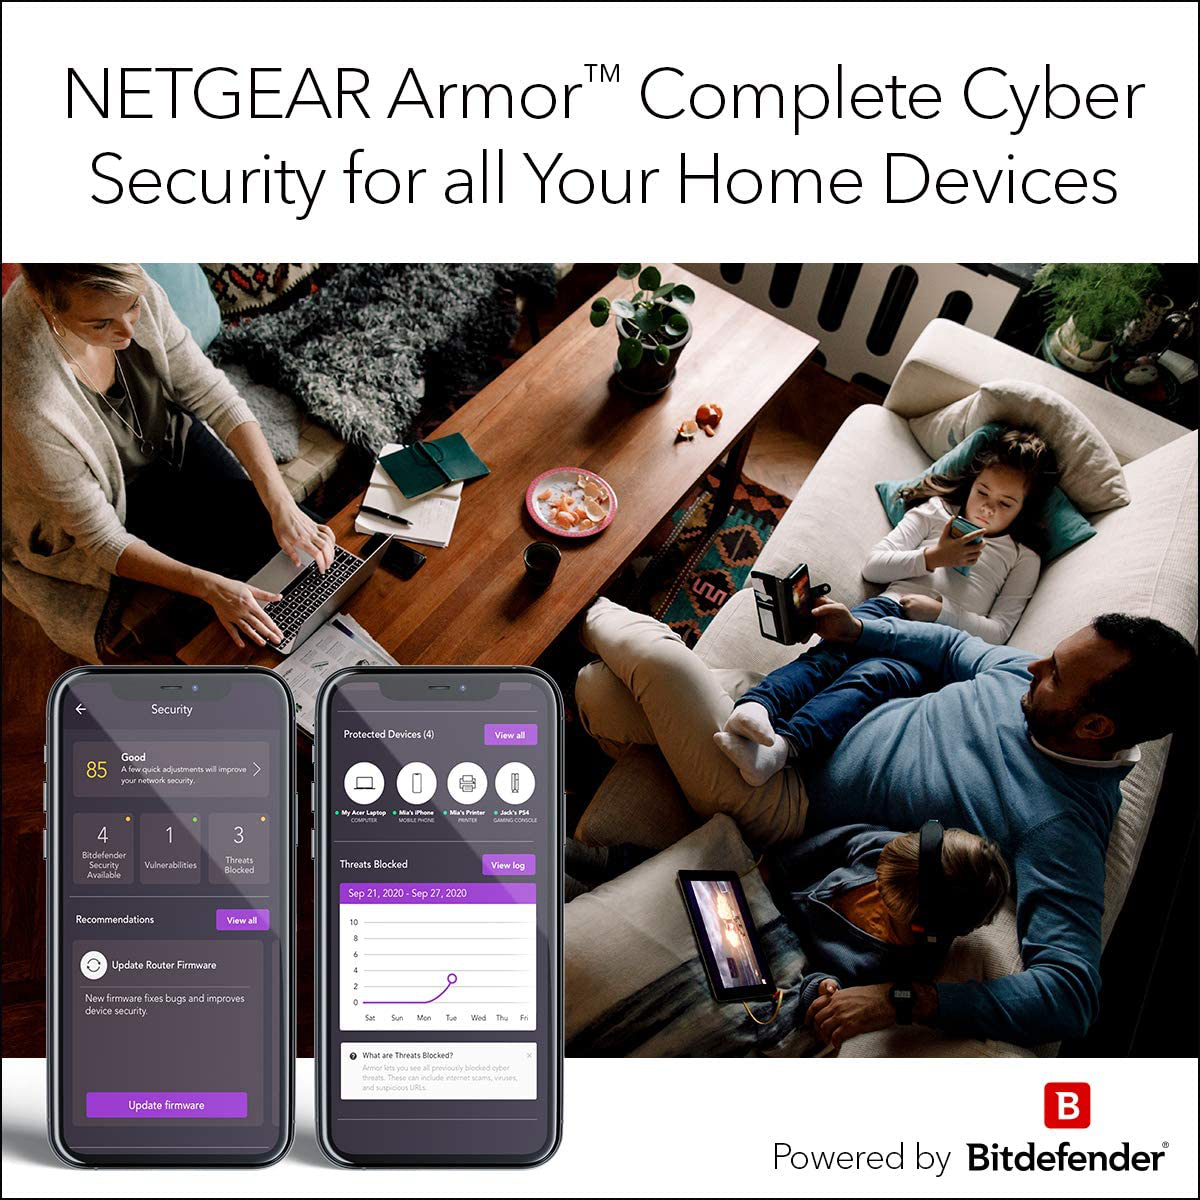 NETGEAR Nighthawk Smart Wi-Fi Router